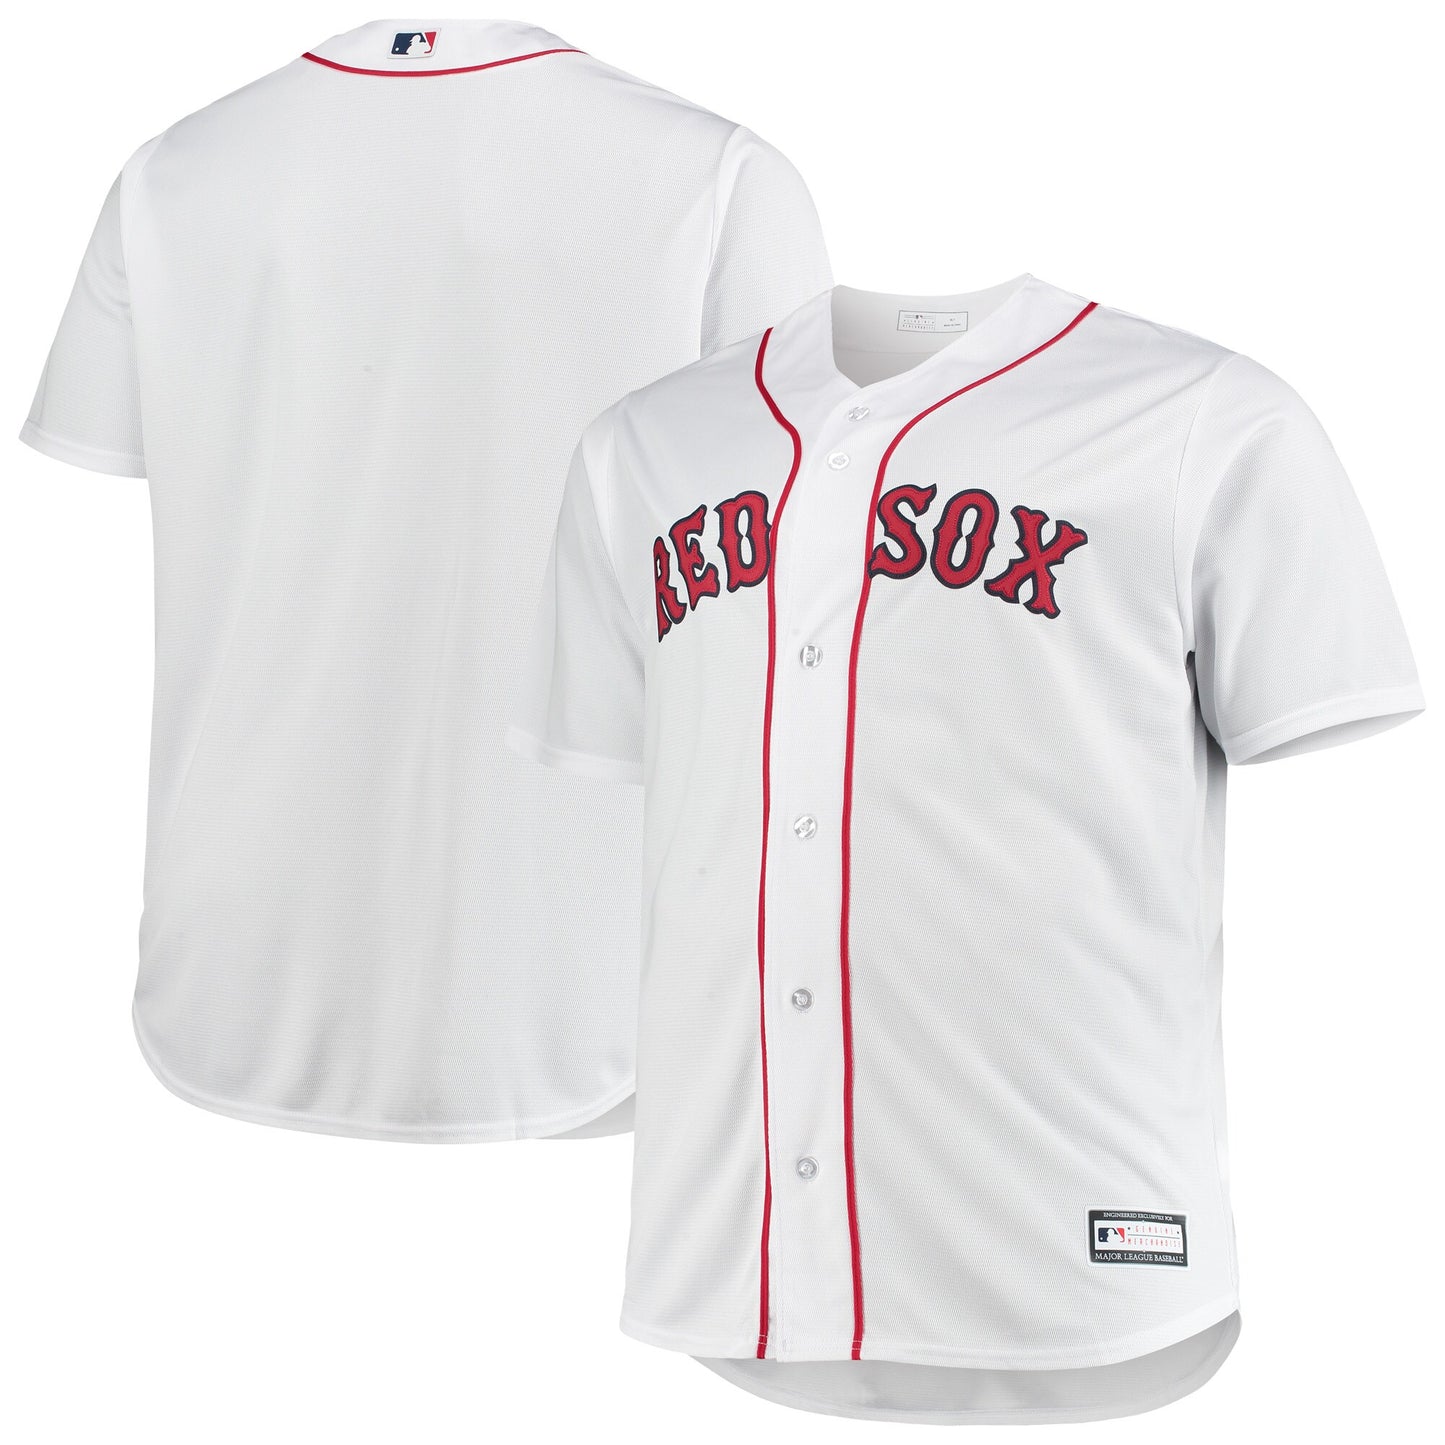 Boston Red Sox Big & Tall Home Replica Team Jersey - White